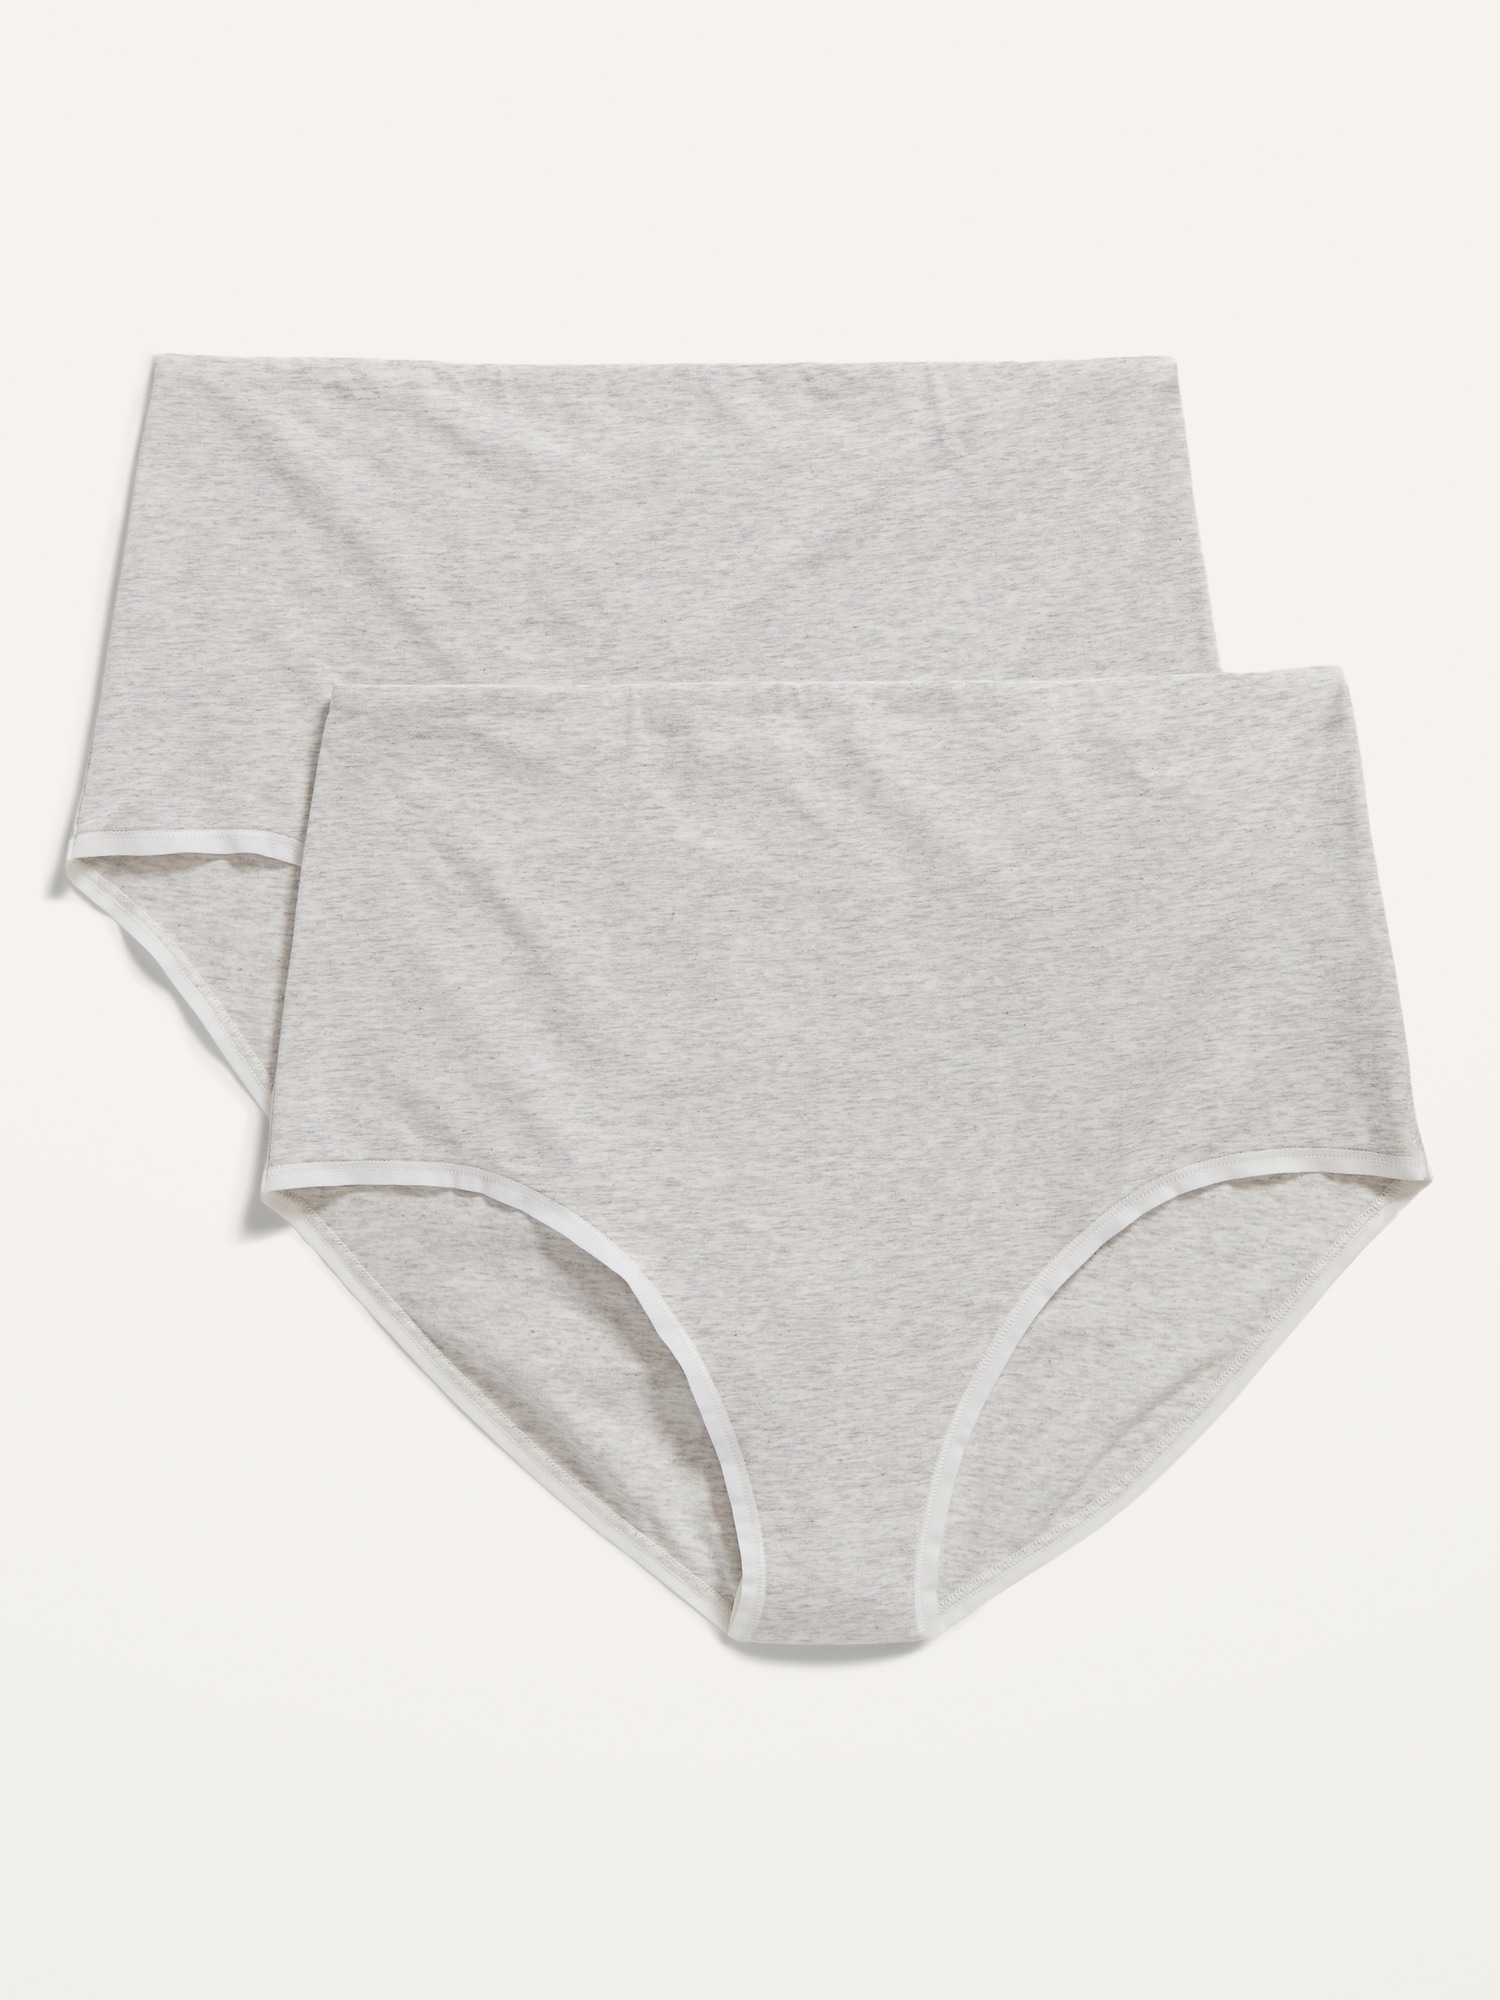 KHWAISH STORE Women’s Cotton Maternity Underwear Long Prego High Waist Soft  Stretchable Comfy Cotton Maternity Pregnancy Panty | Size (0-9 Month)